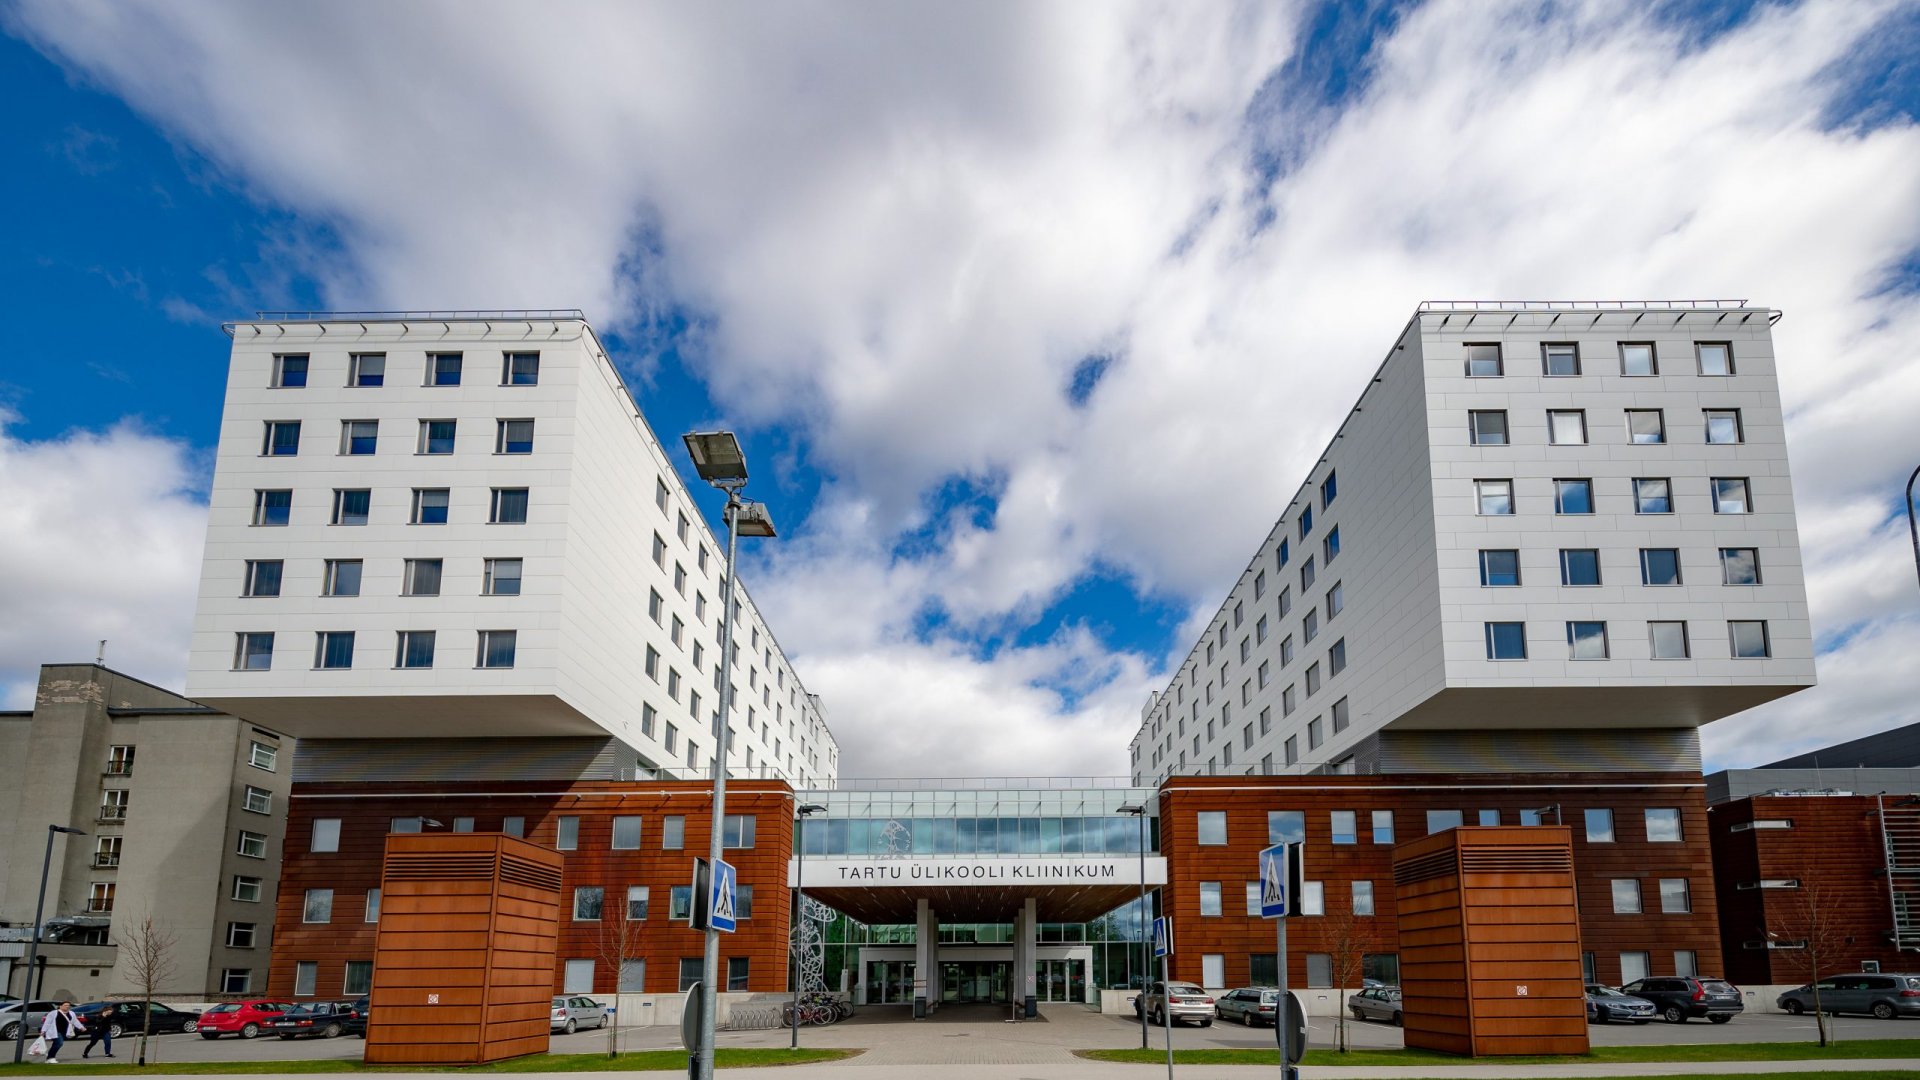 Tartu University Hospital